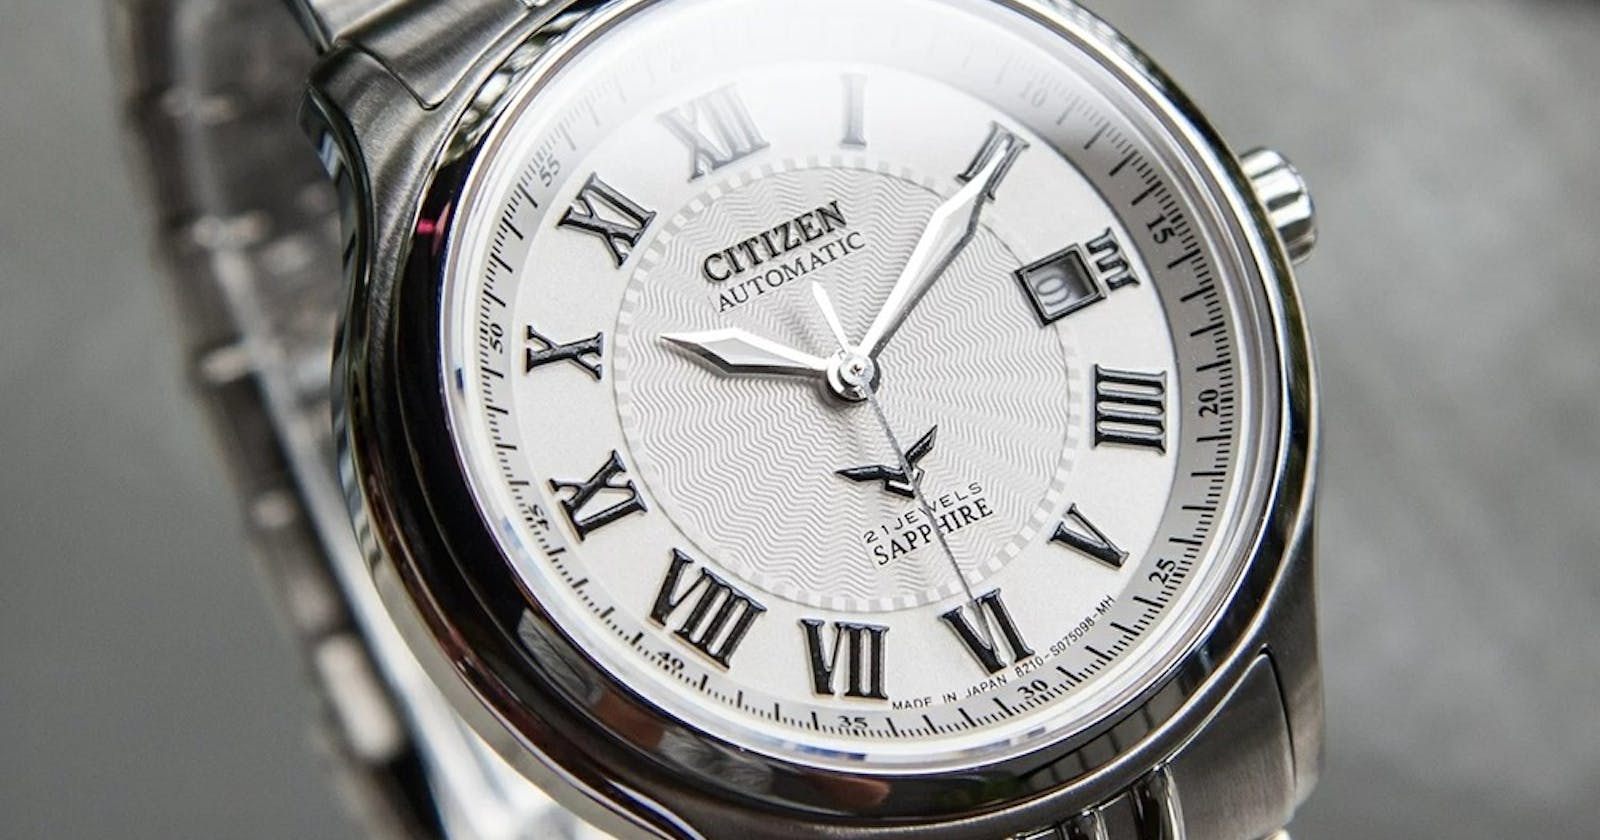 Đồng hồ Citizen automatic 21 jewels sapphire giá bao nhiêu?